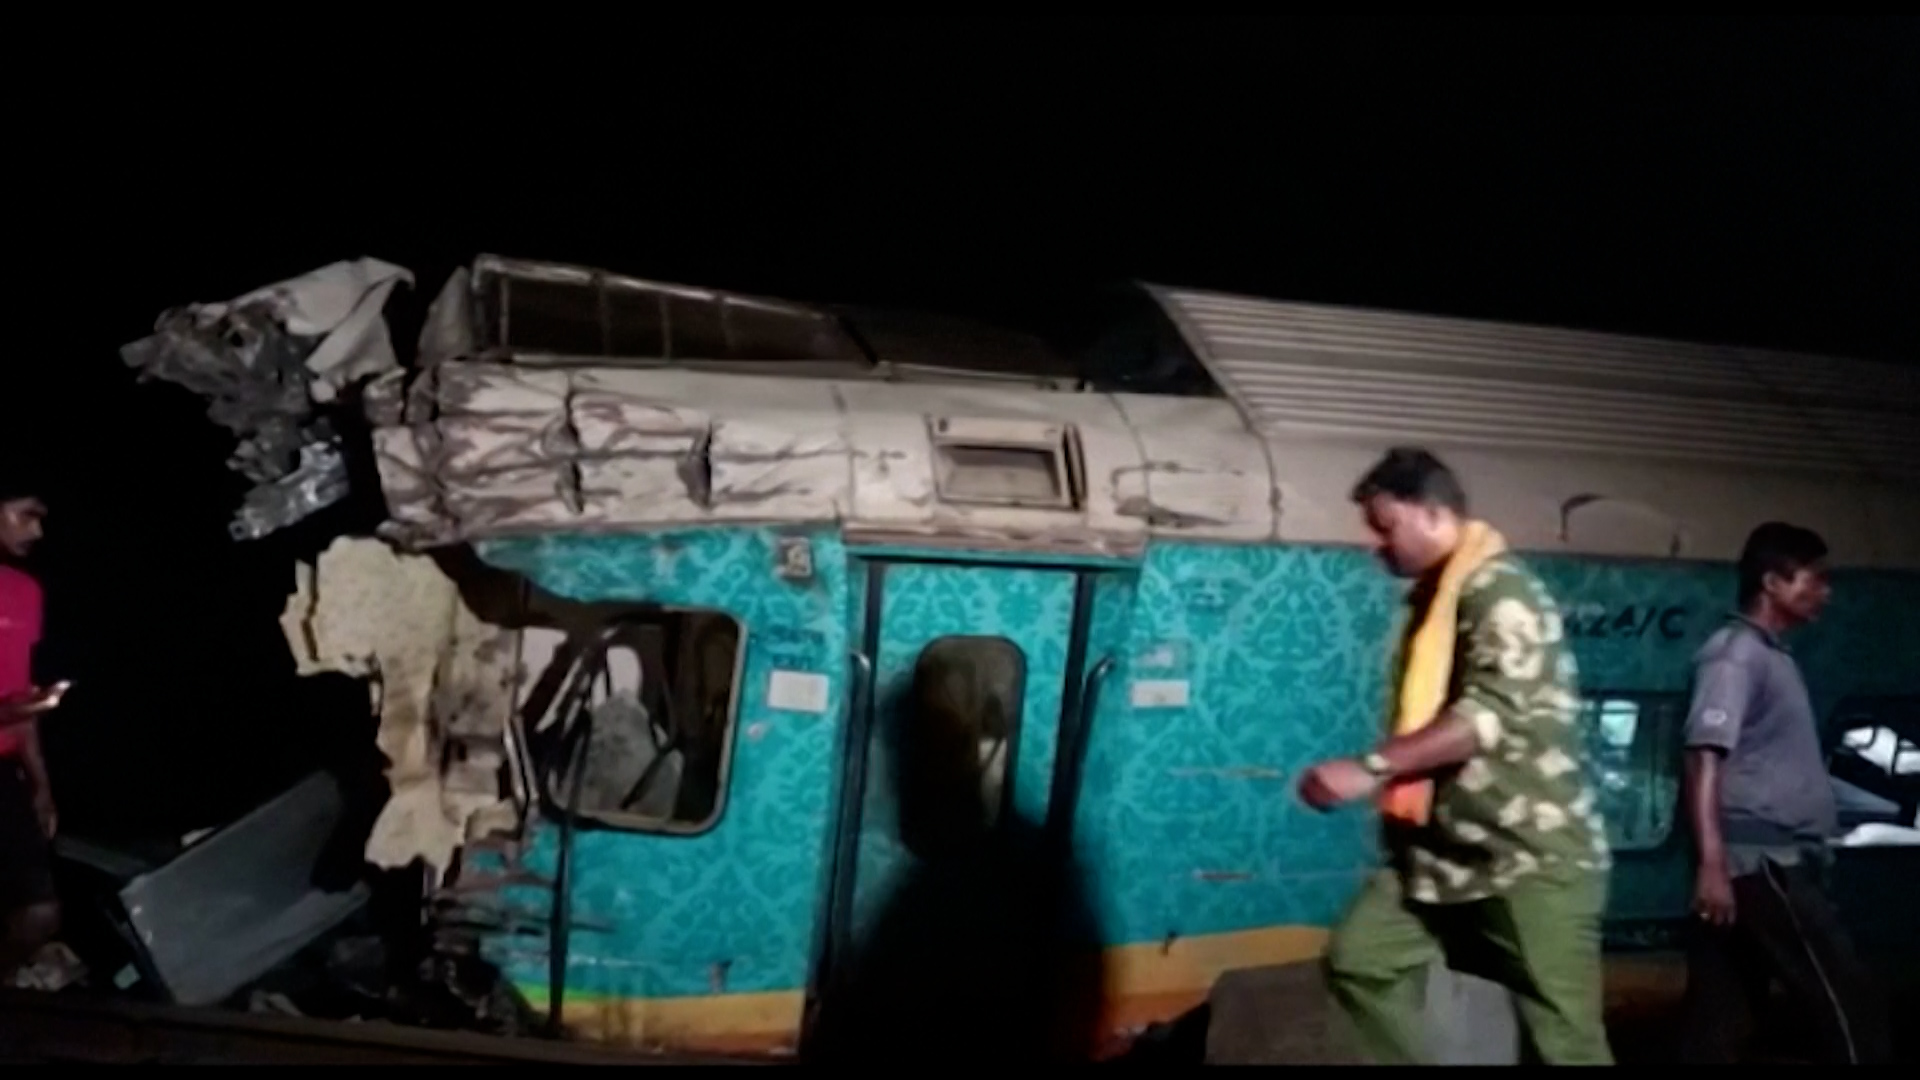 train accident in india